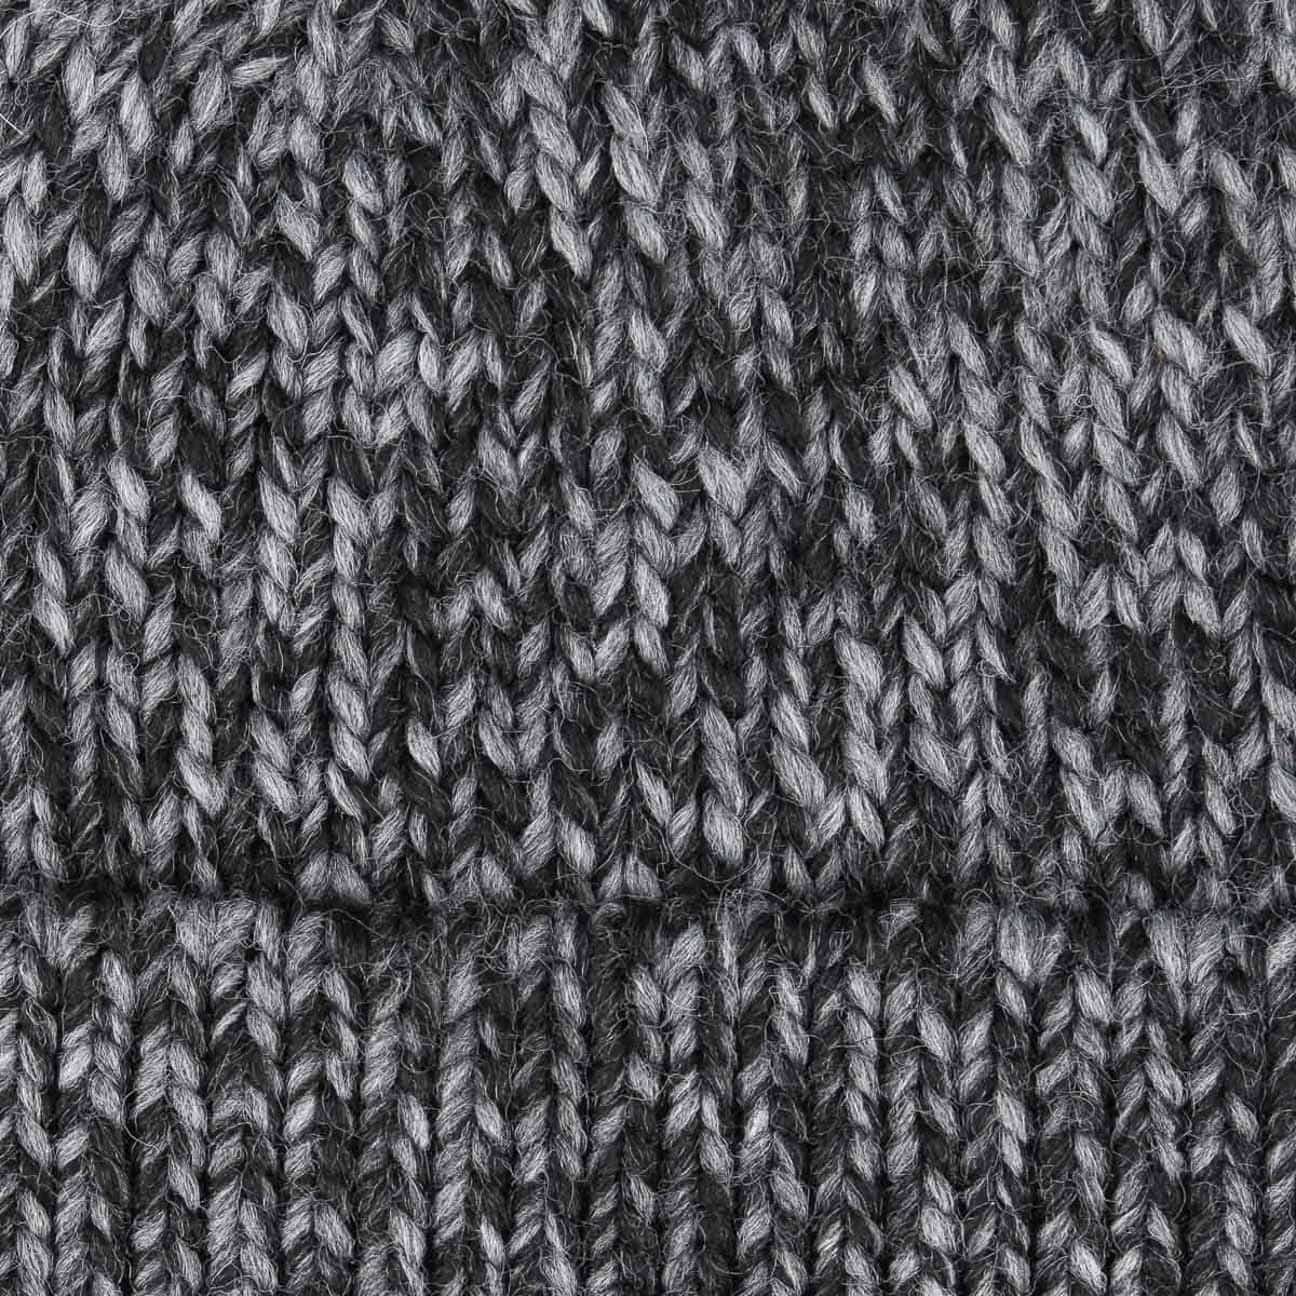 Bicolo Knit Hat with Cuff by Lierys - 42,95